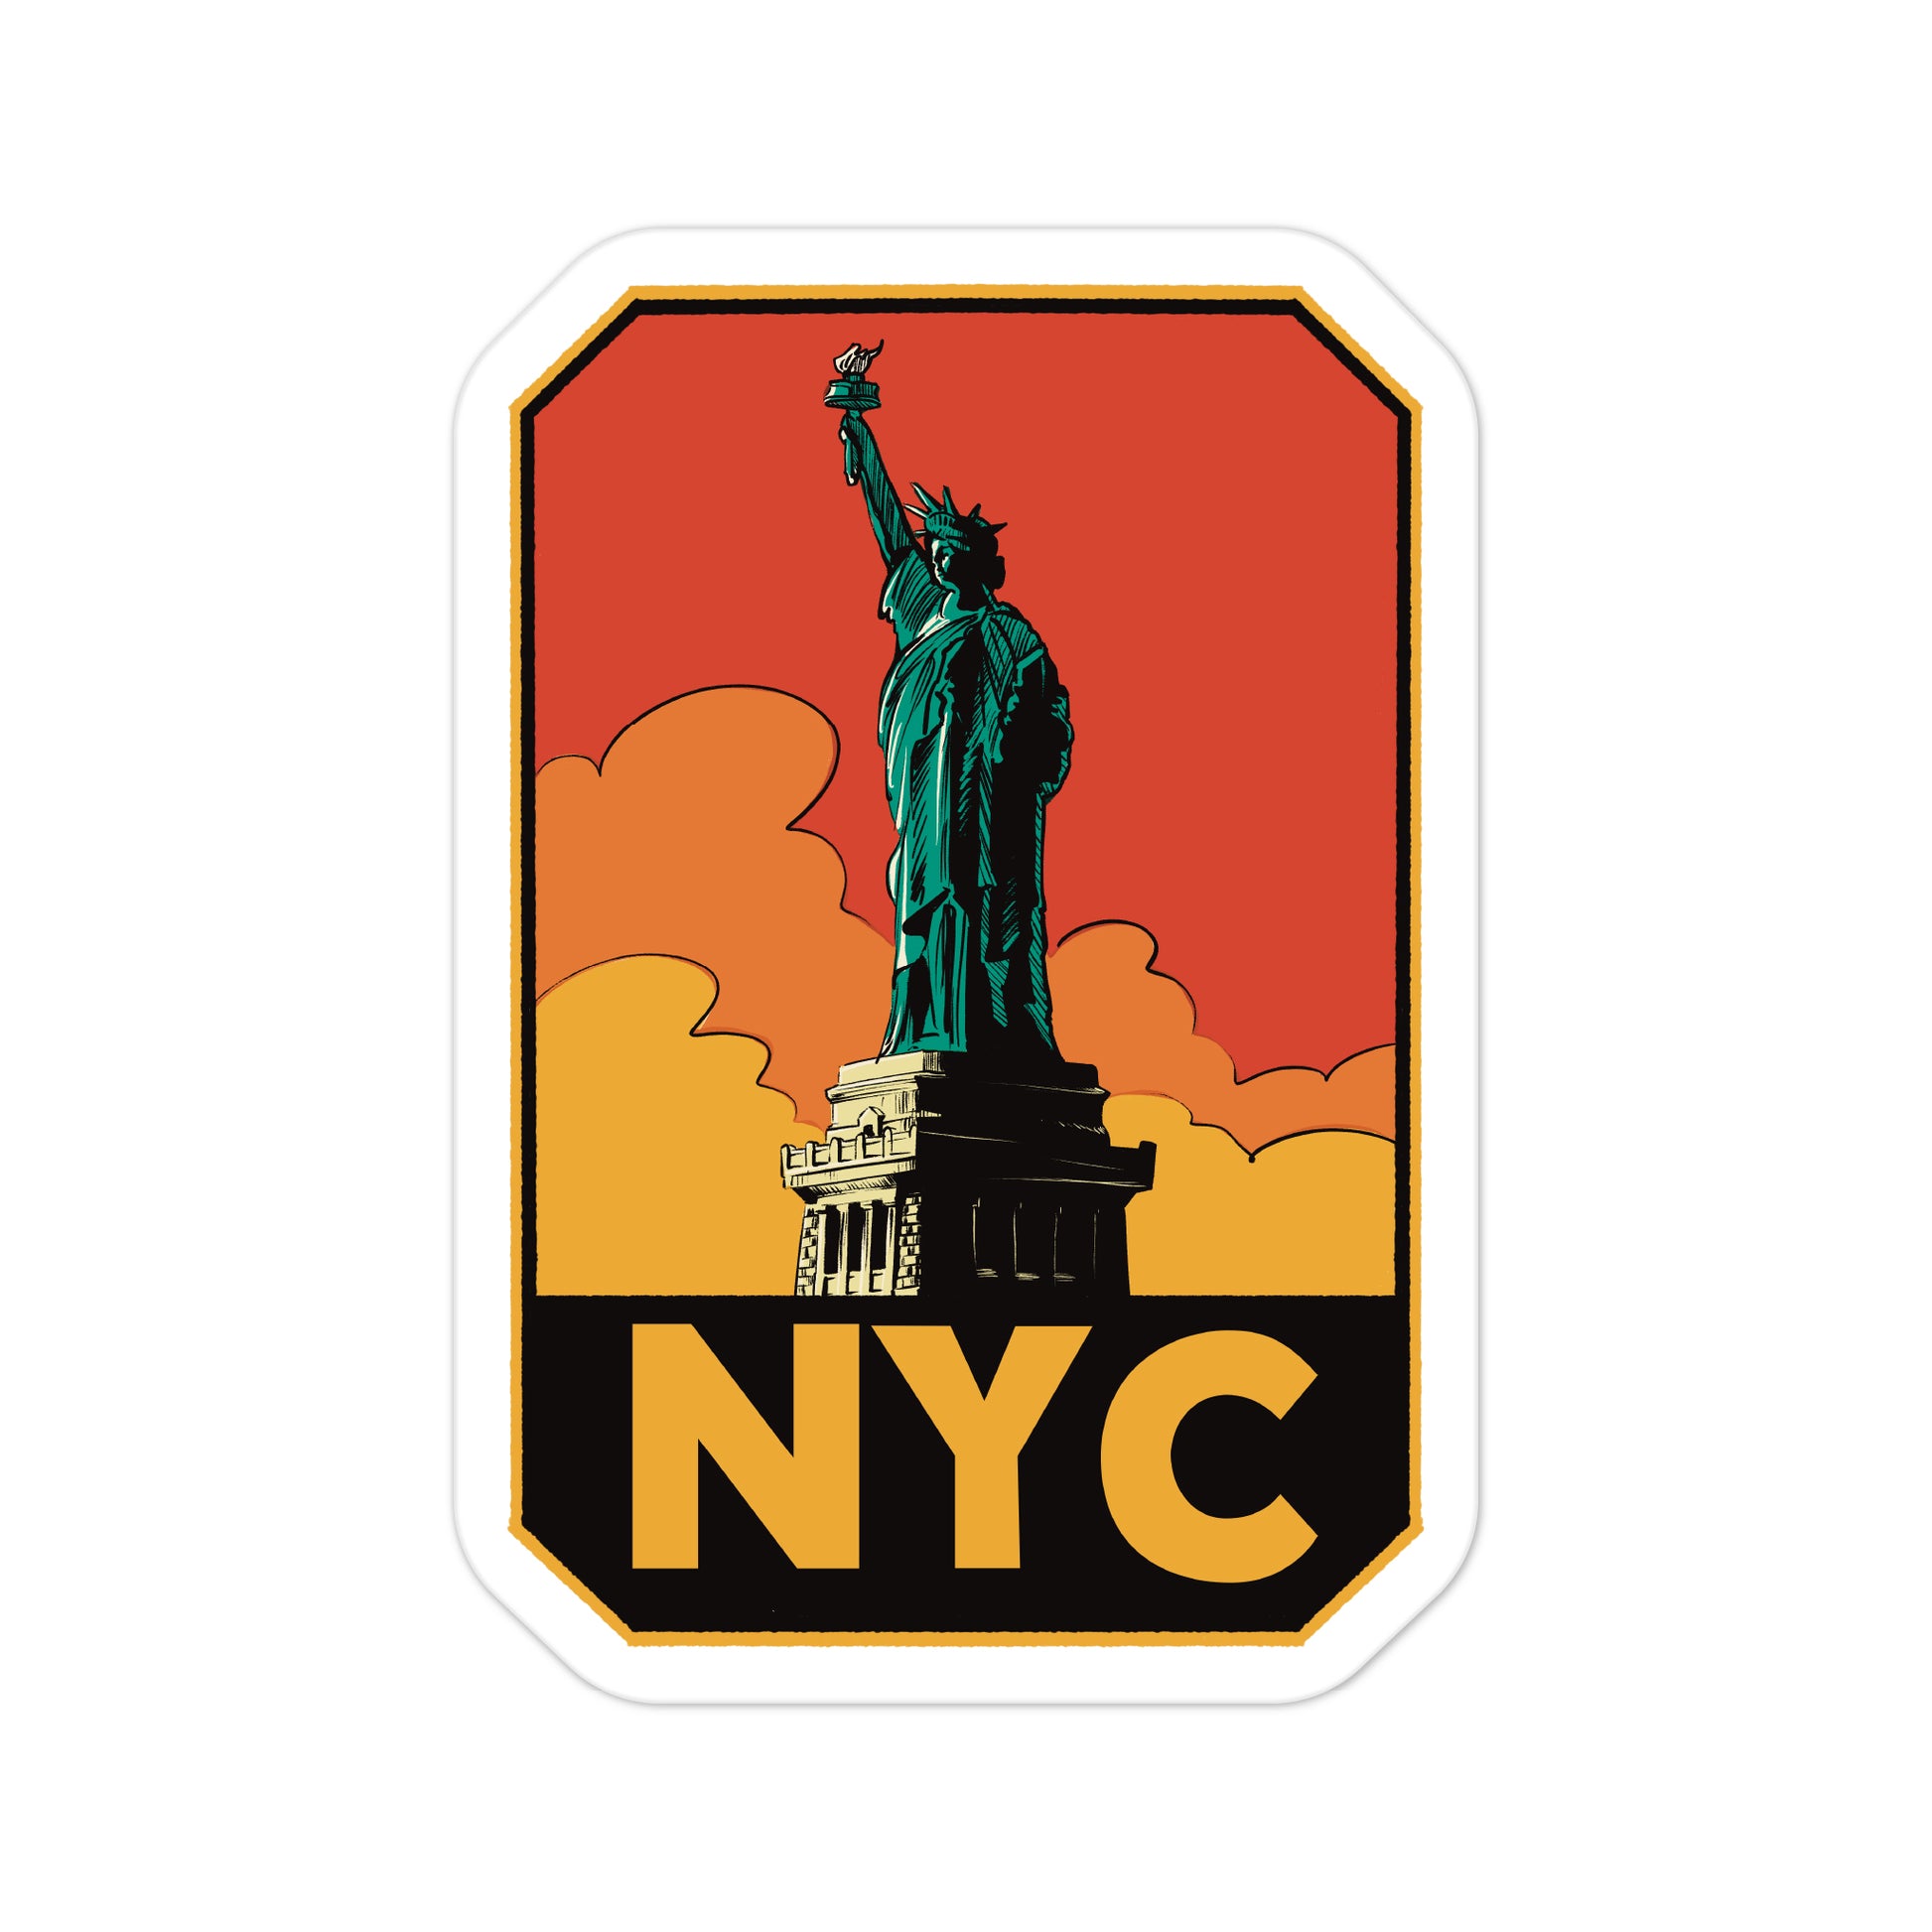 A sticker of New York City